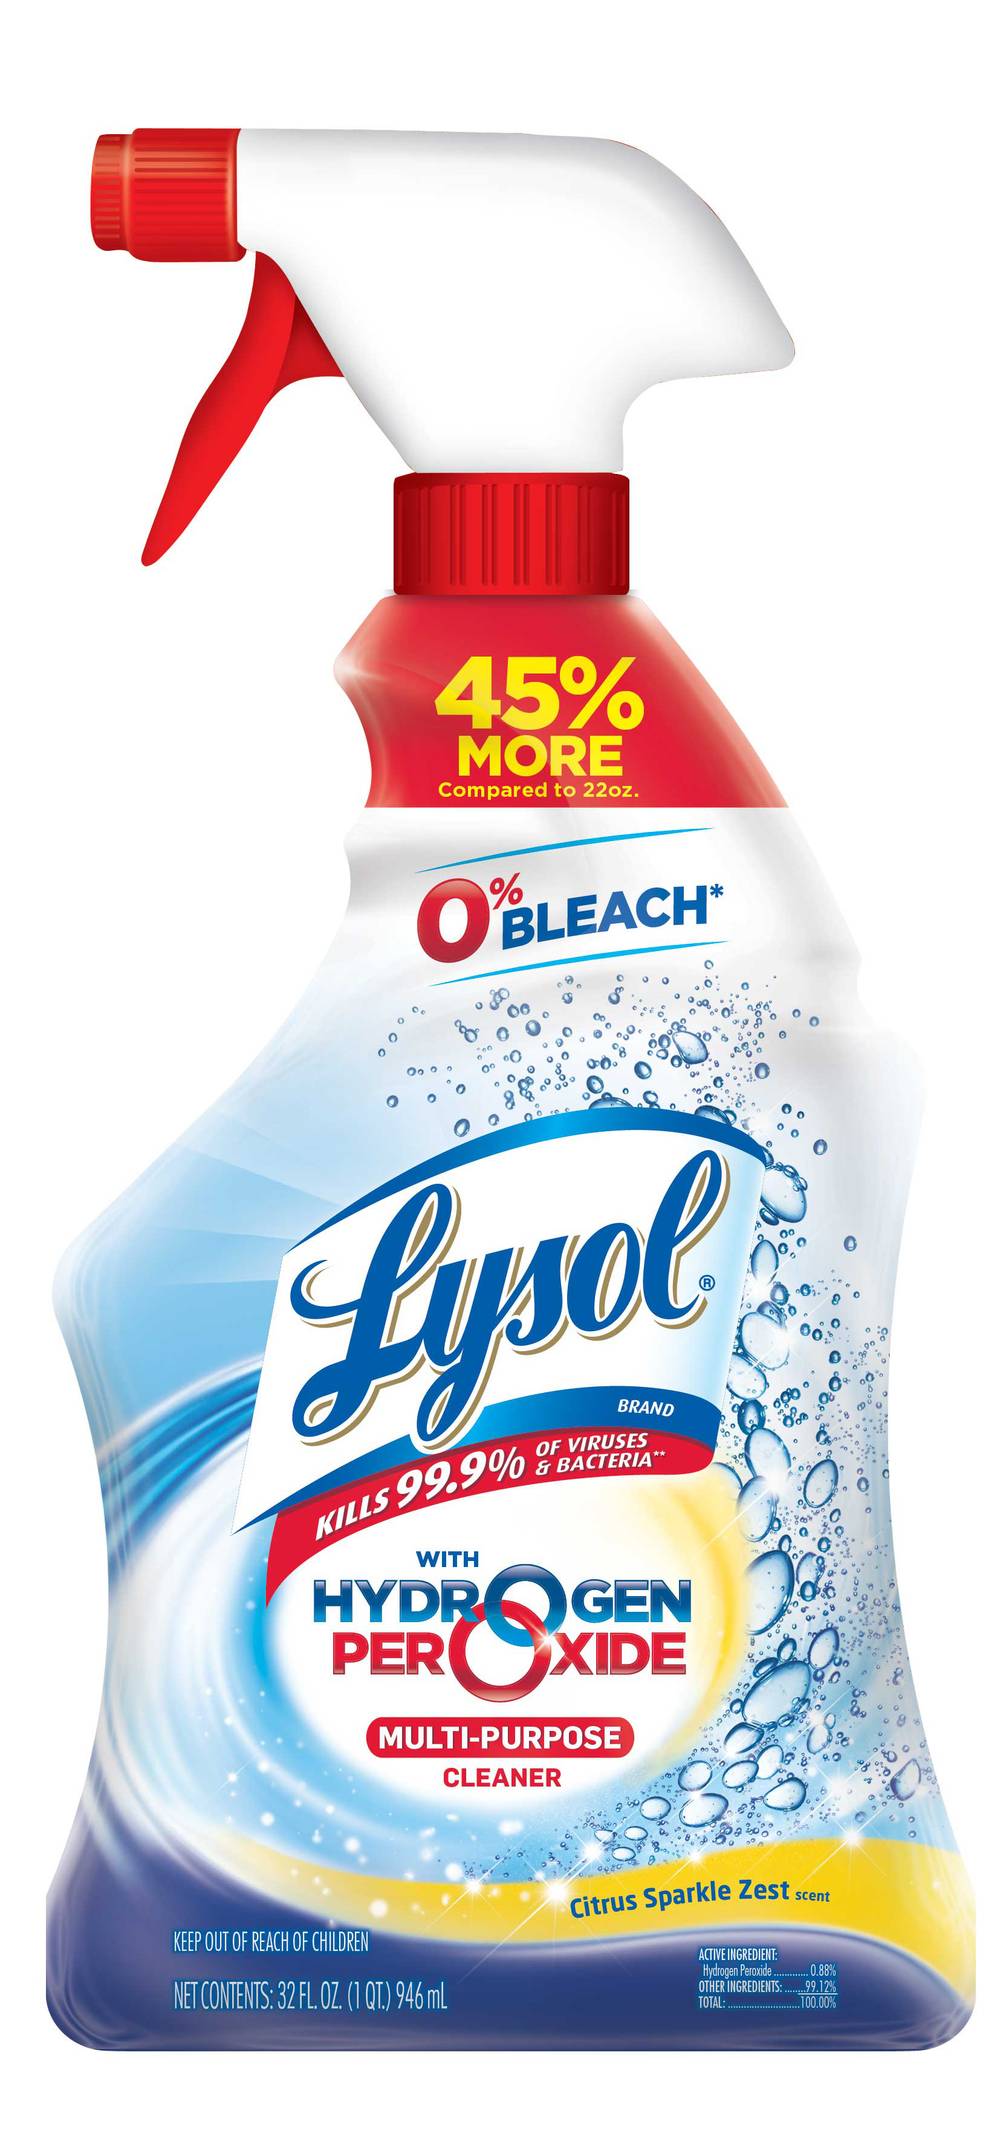 Lysol Hydrogen Peroxide Multi-Purpose Cleaner